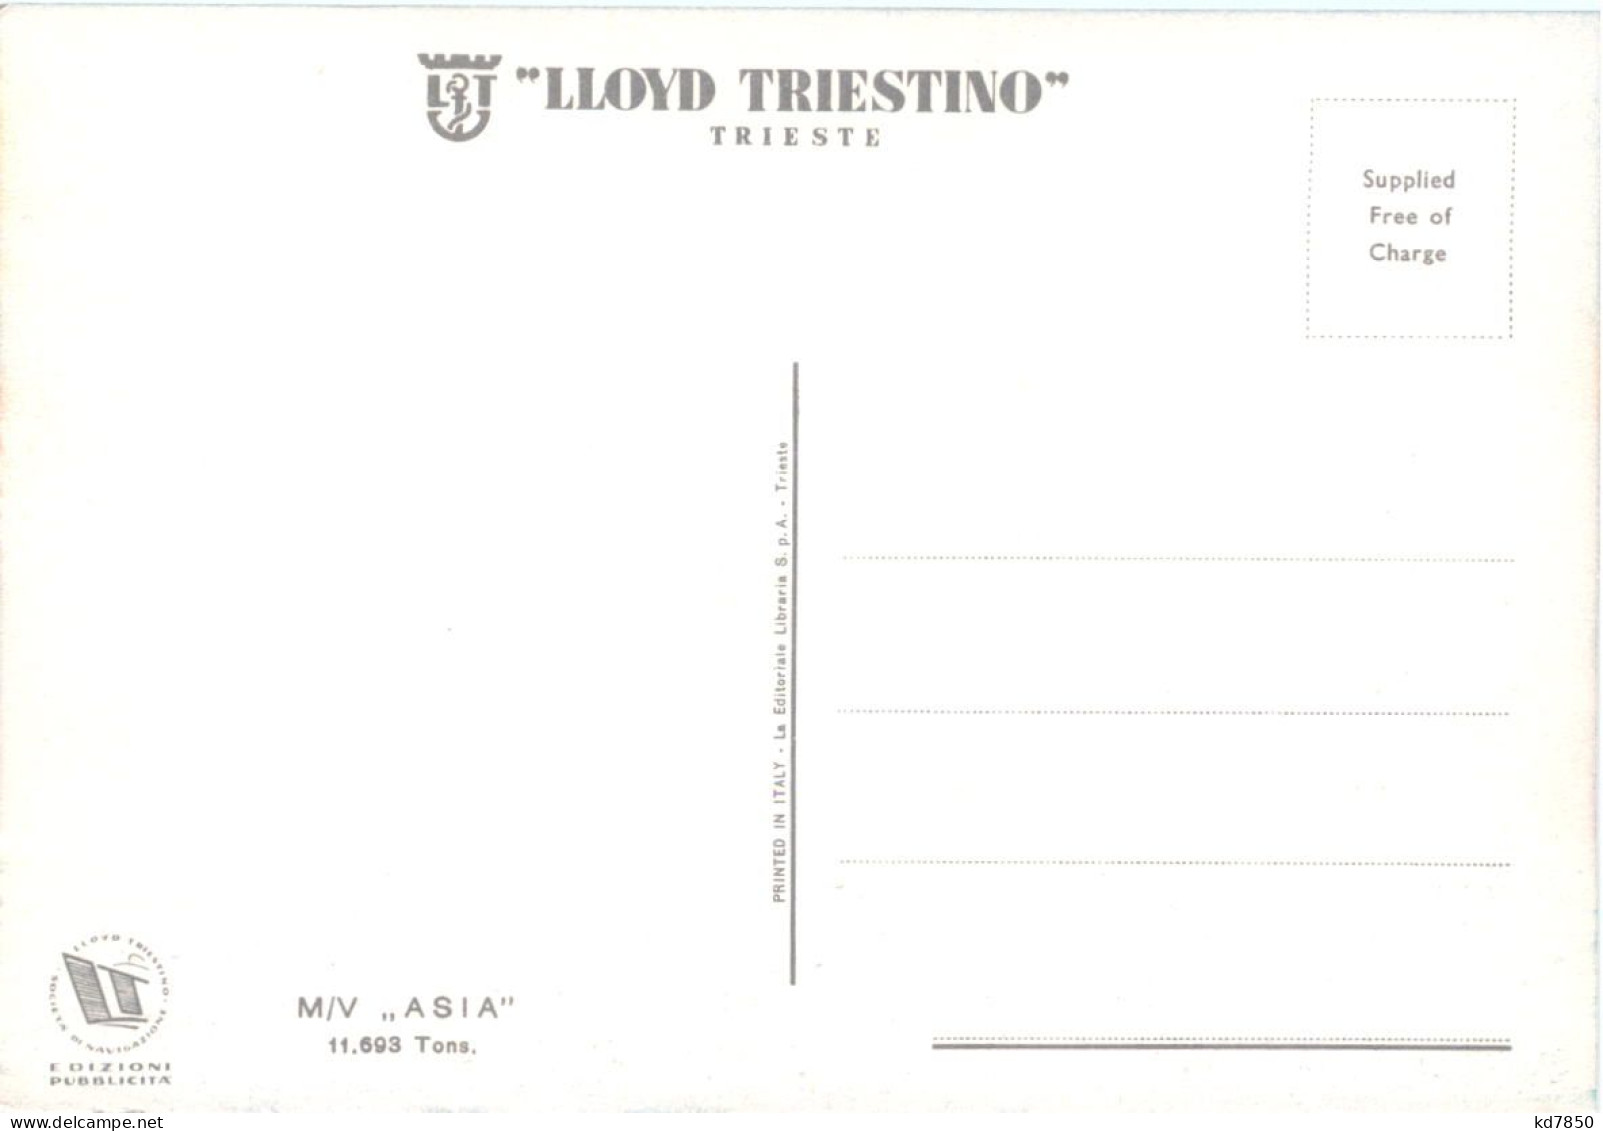 Lloyd Triestino - MN Asia - Piroscafi